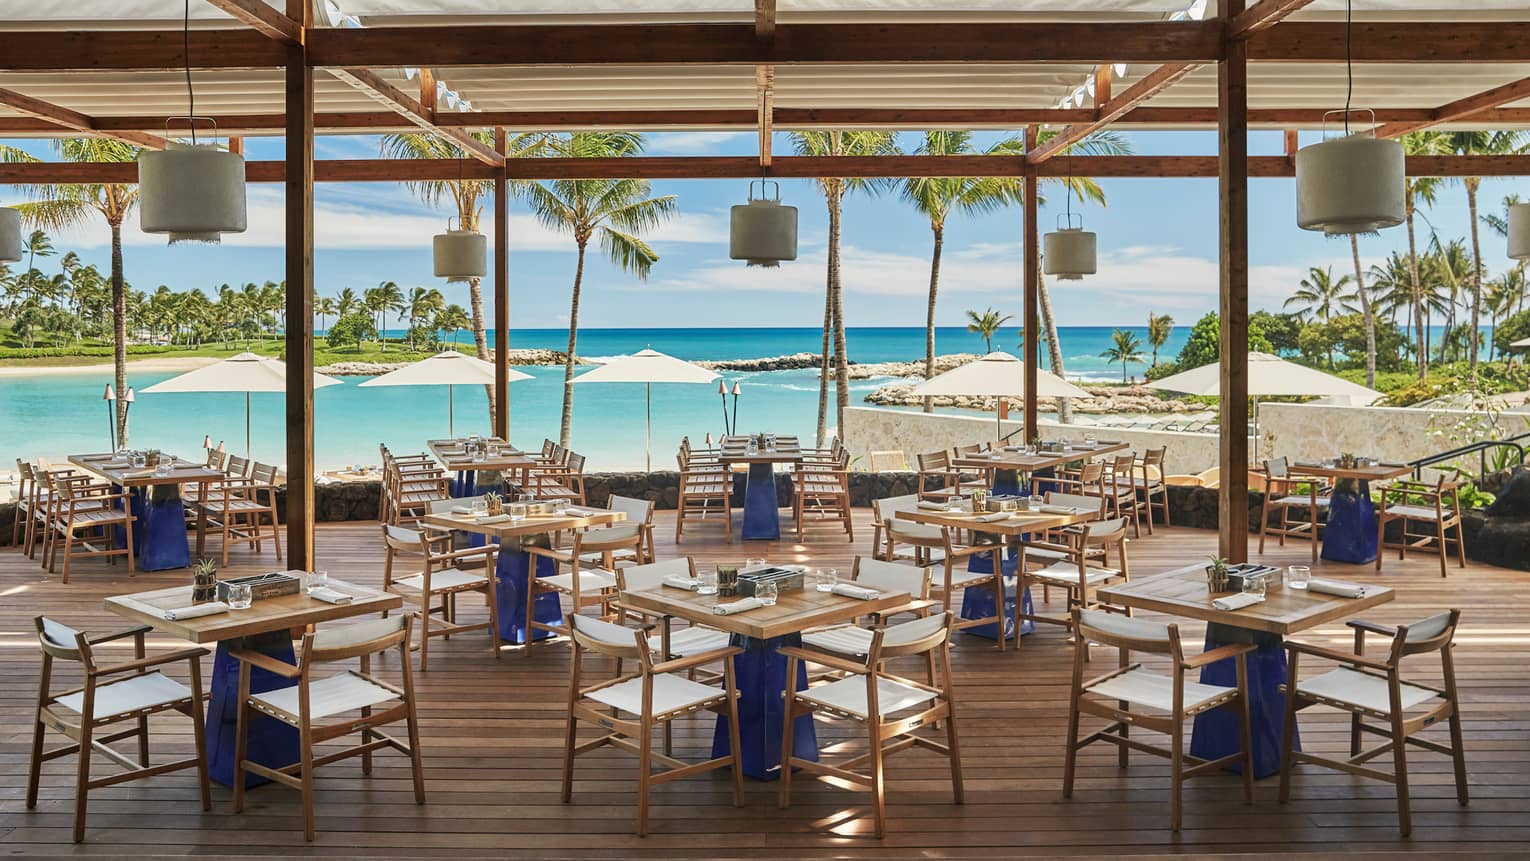 Large dining room under wood pergola on patio overlooking turquoise lagoon